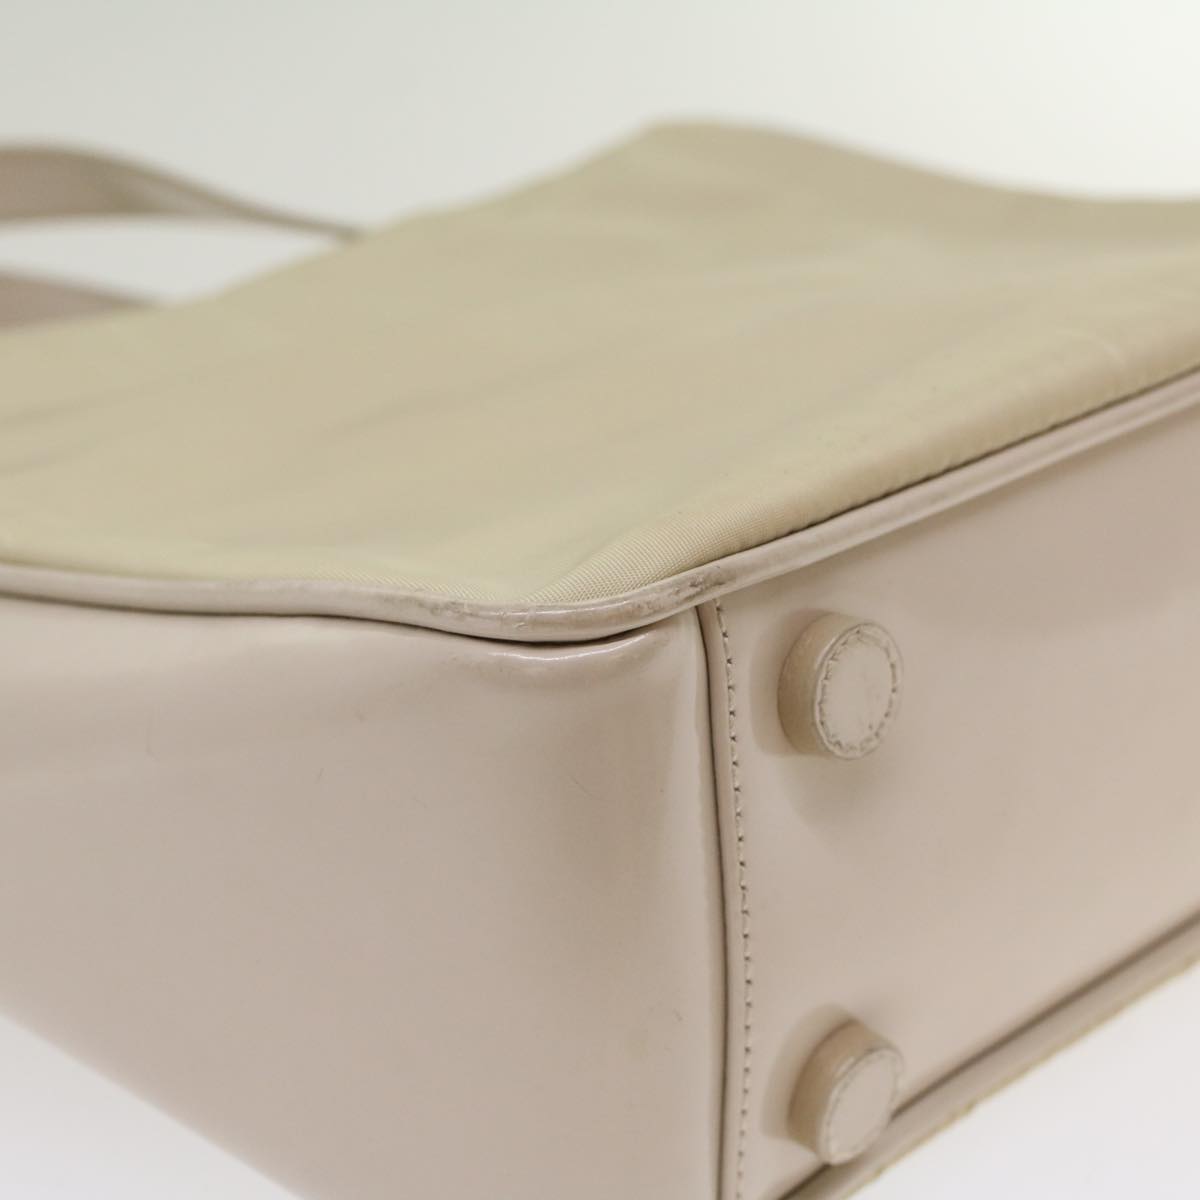 PRADA Hand Bag Nylon Leather Beige Ivory Auth 49308